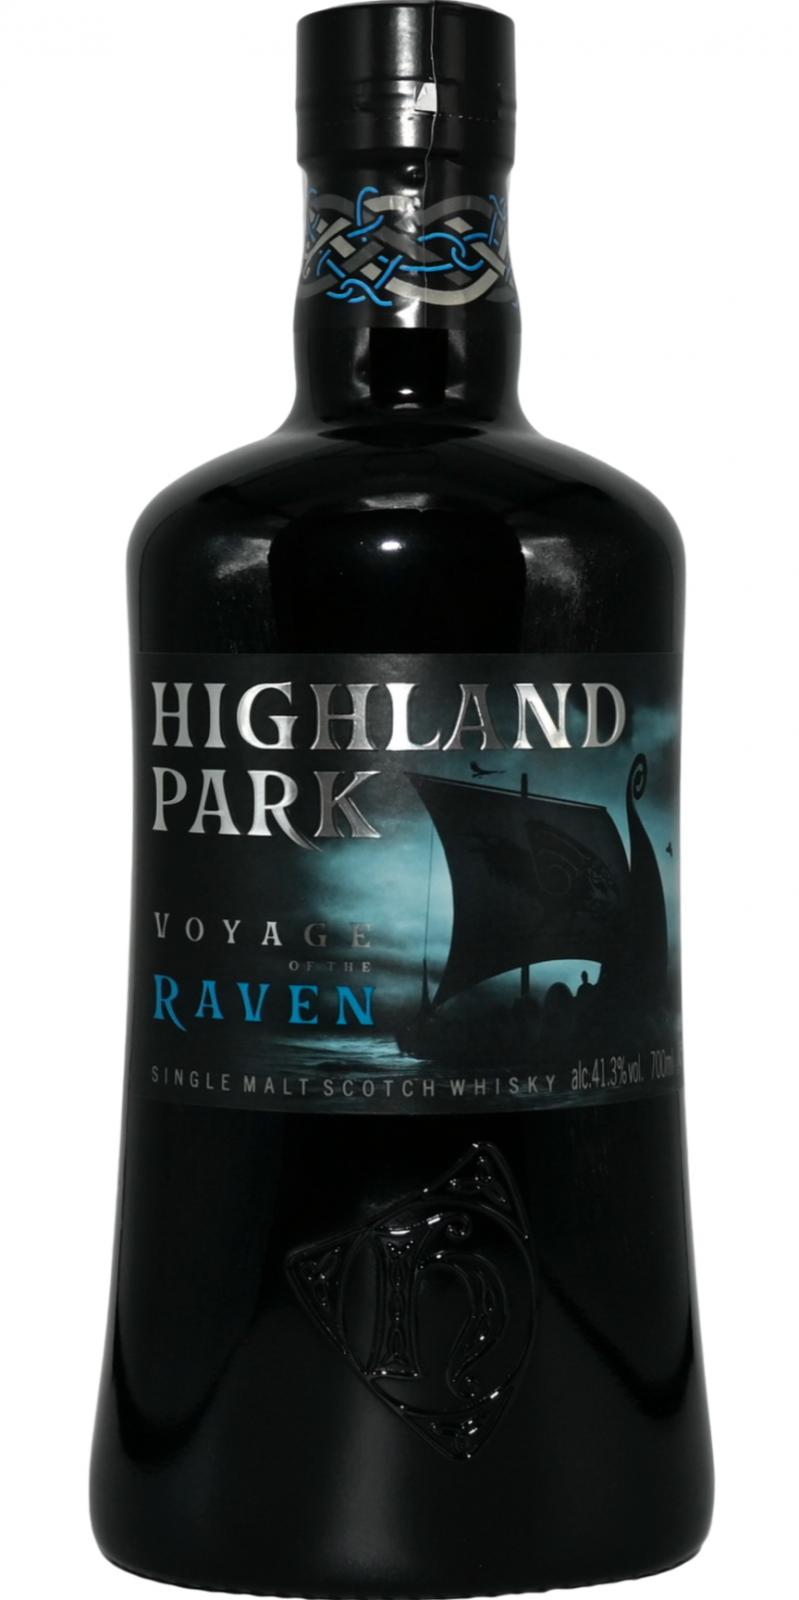 Highland Park Voyage of the Raven